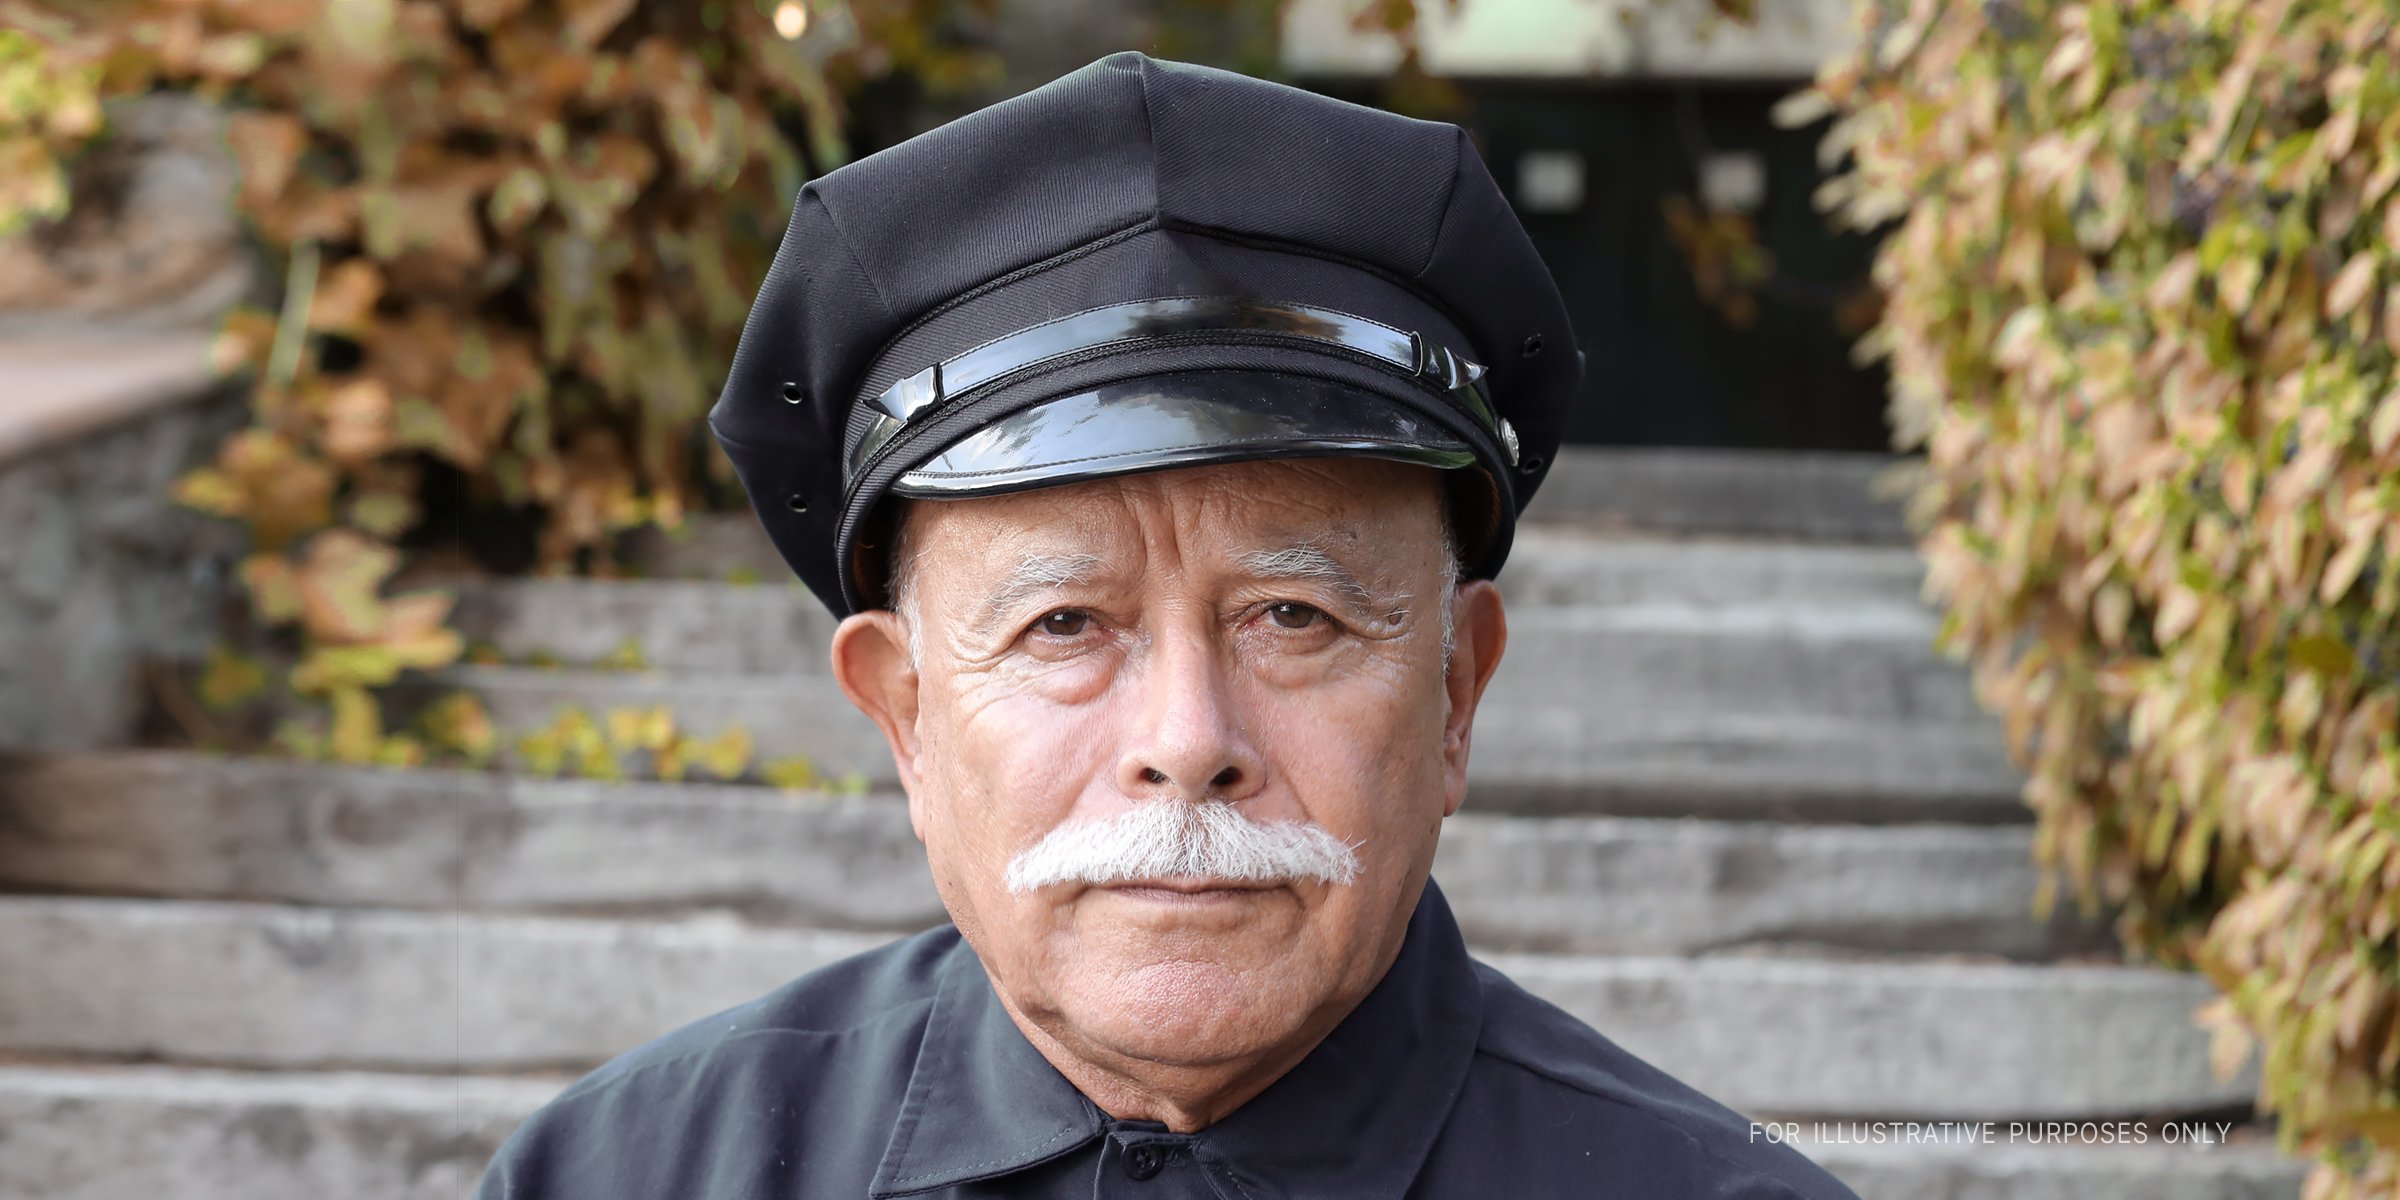 A senior policeman | Source: Shutterstock